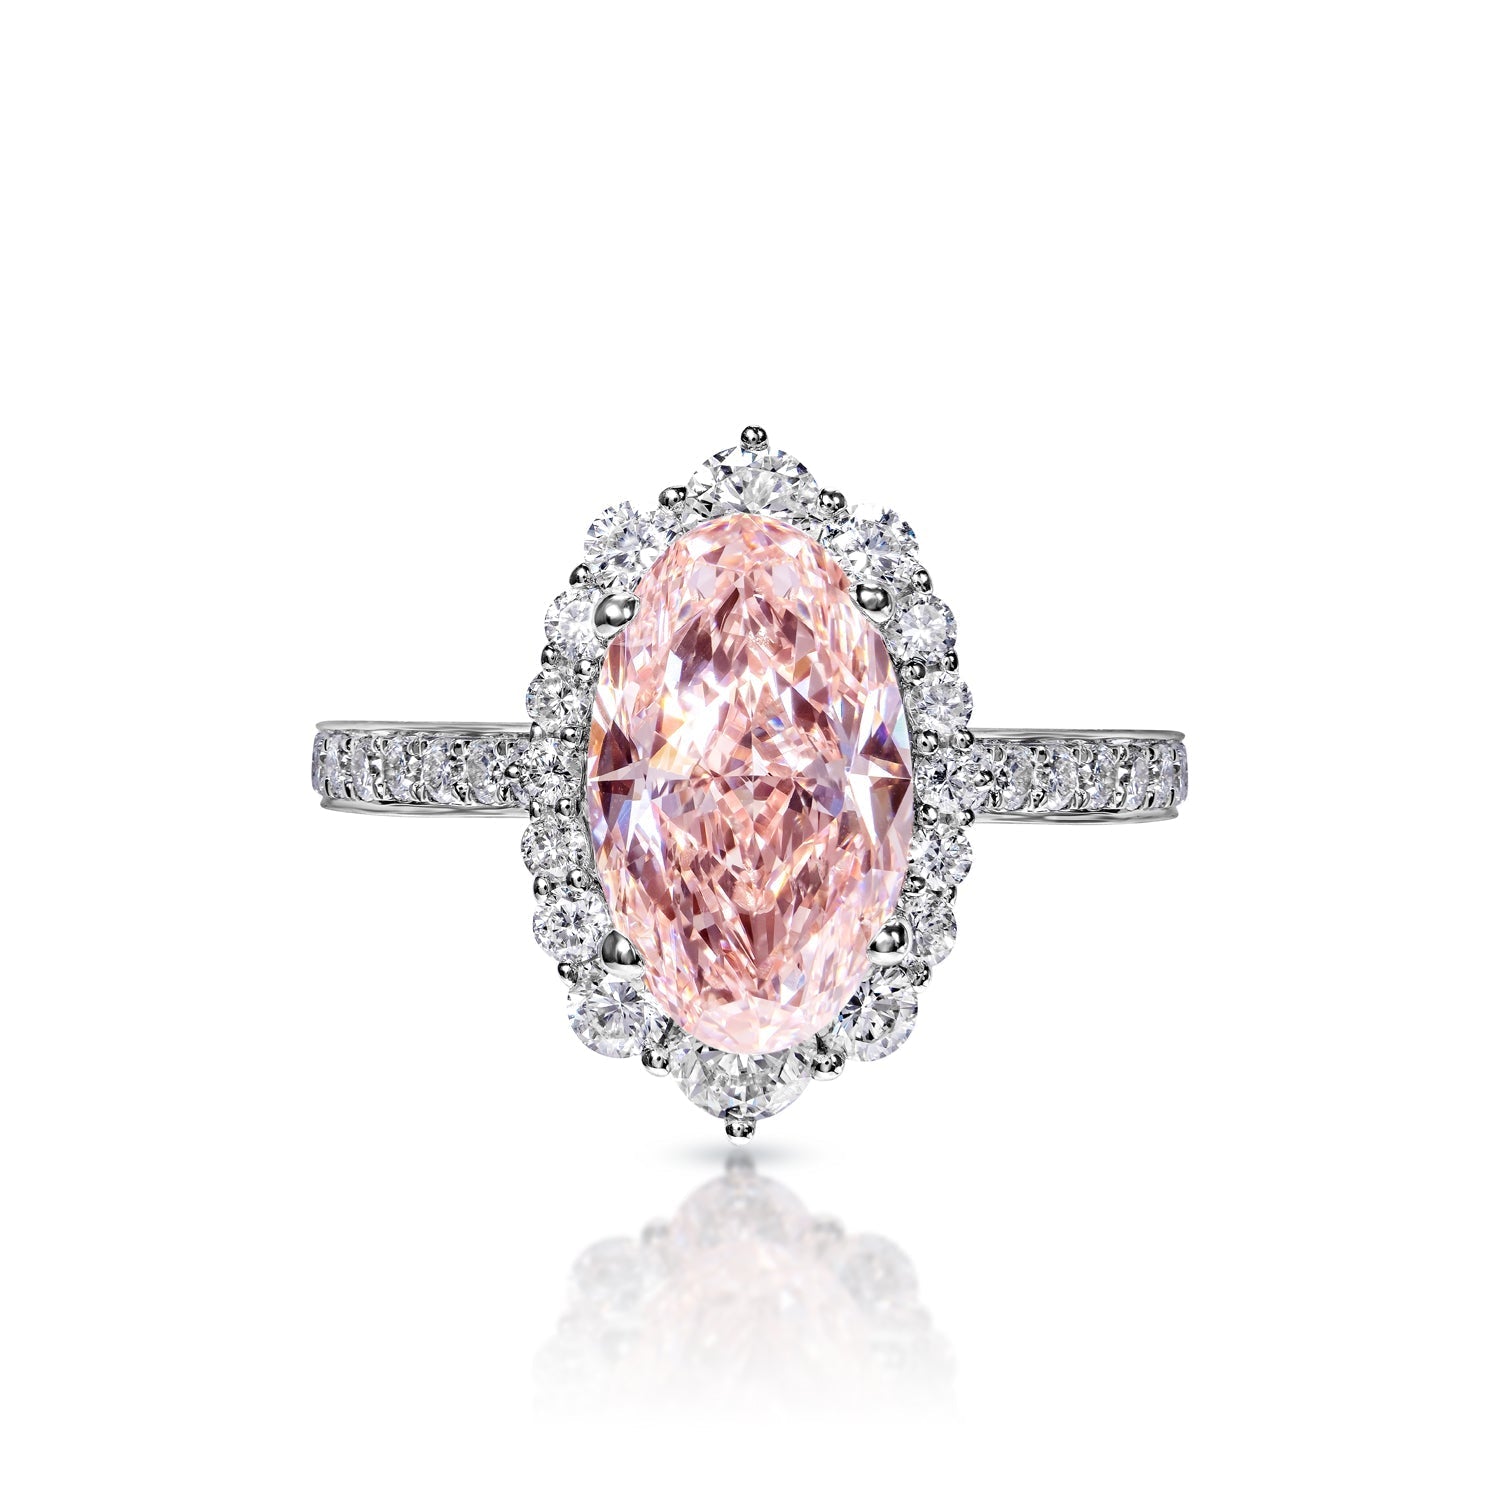 Buy Beautiful Pink Diamond Ring, Engagement Ring, 3 Carats Cushion Cut  Fancy Pink Diamond Simulant Ring, Pink Diamond Solitaire Ring Online in  India - Etsy